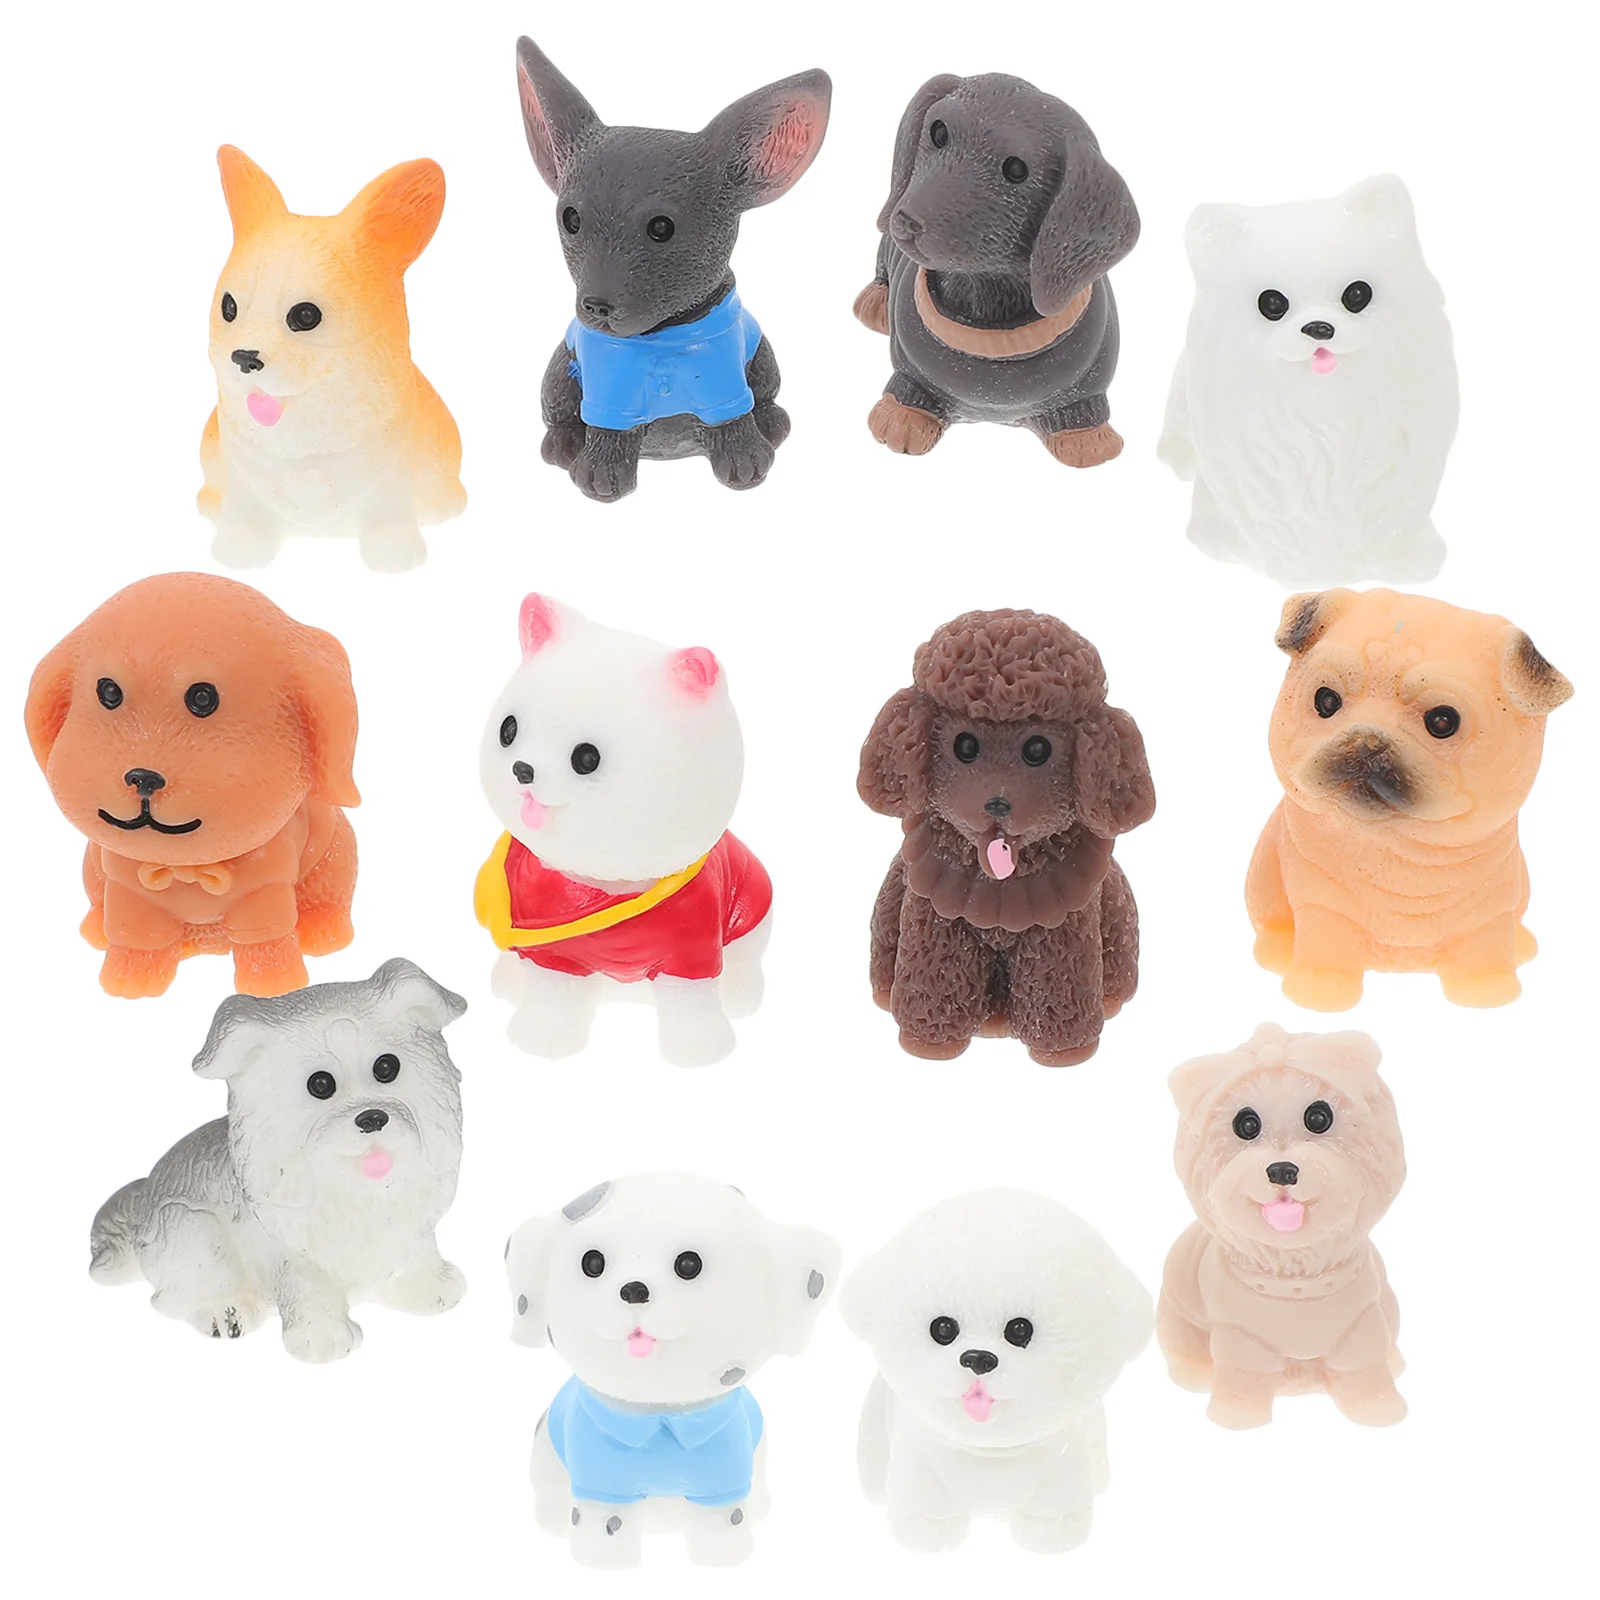 

12 Pcs Micro Landscape Puppy Dog Statue Figurines Home Decor Crafts Table Ornaments